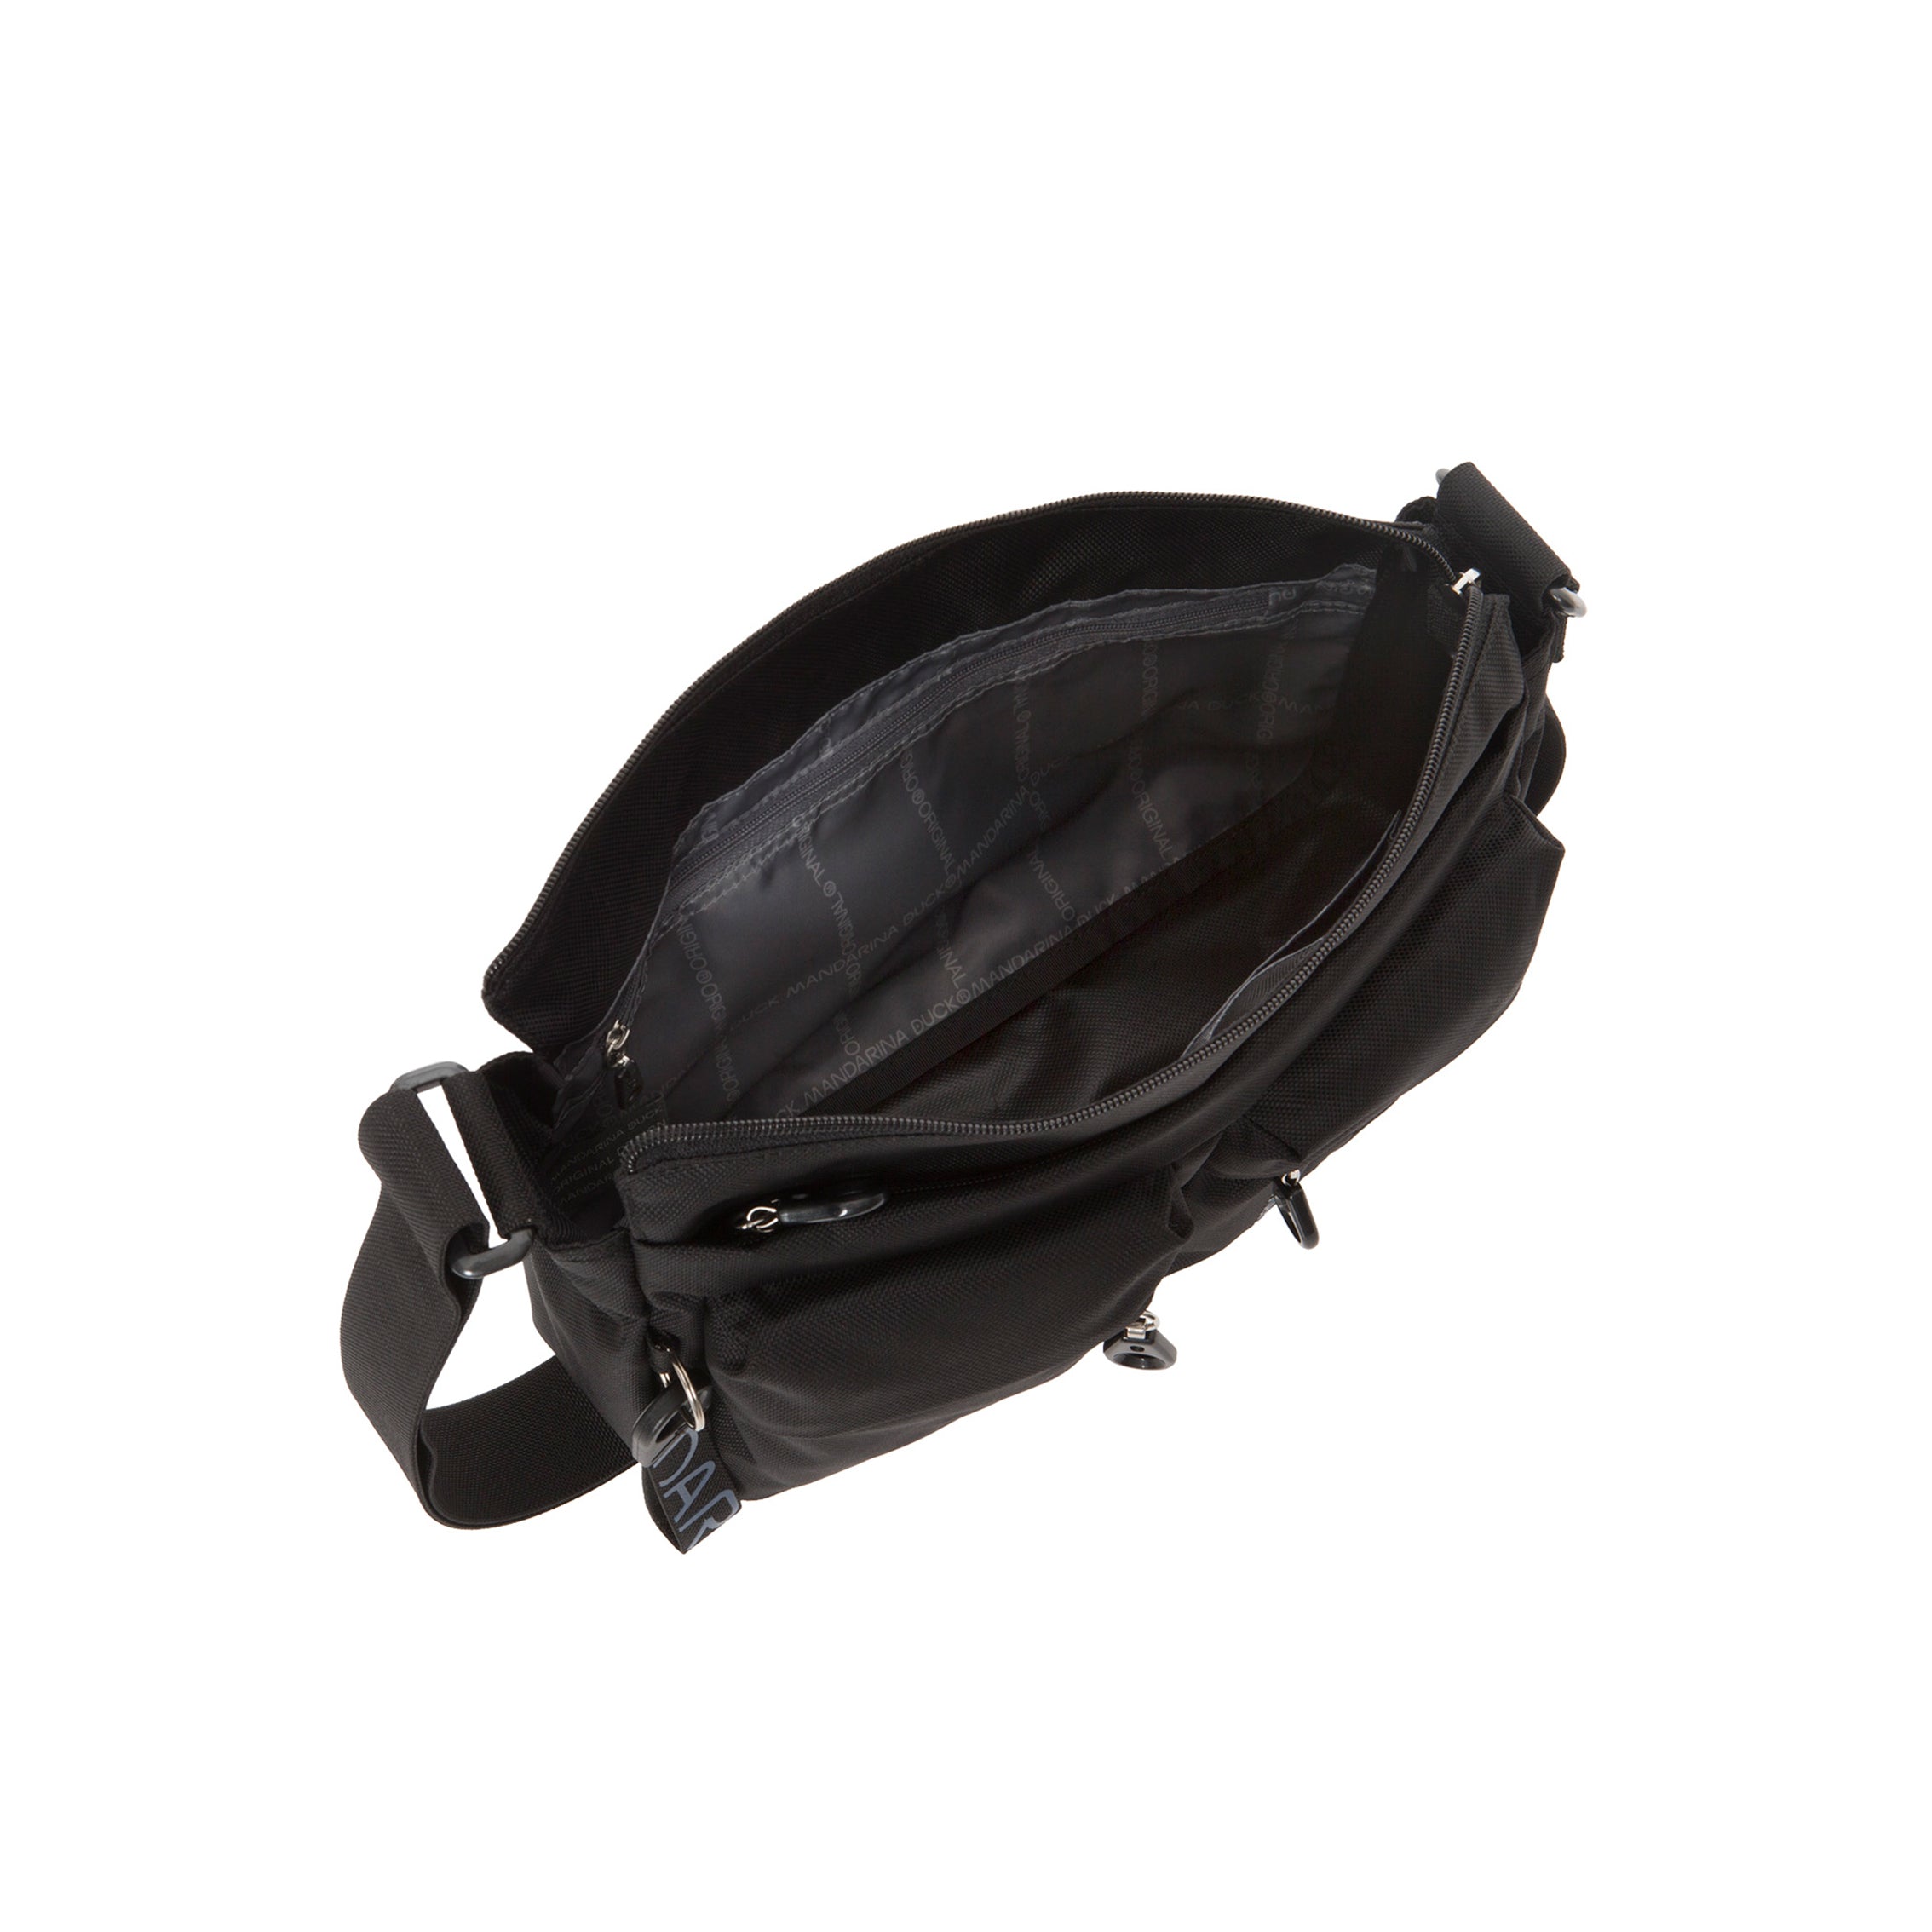 Buy Tan Handbags for Women by Lavie Online | Ajio.com